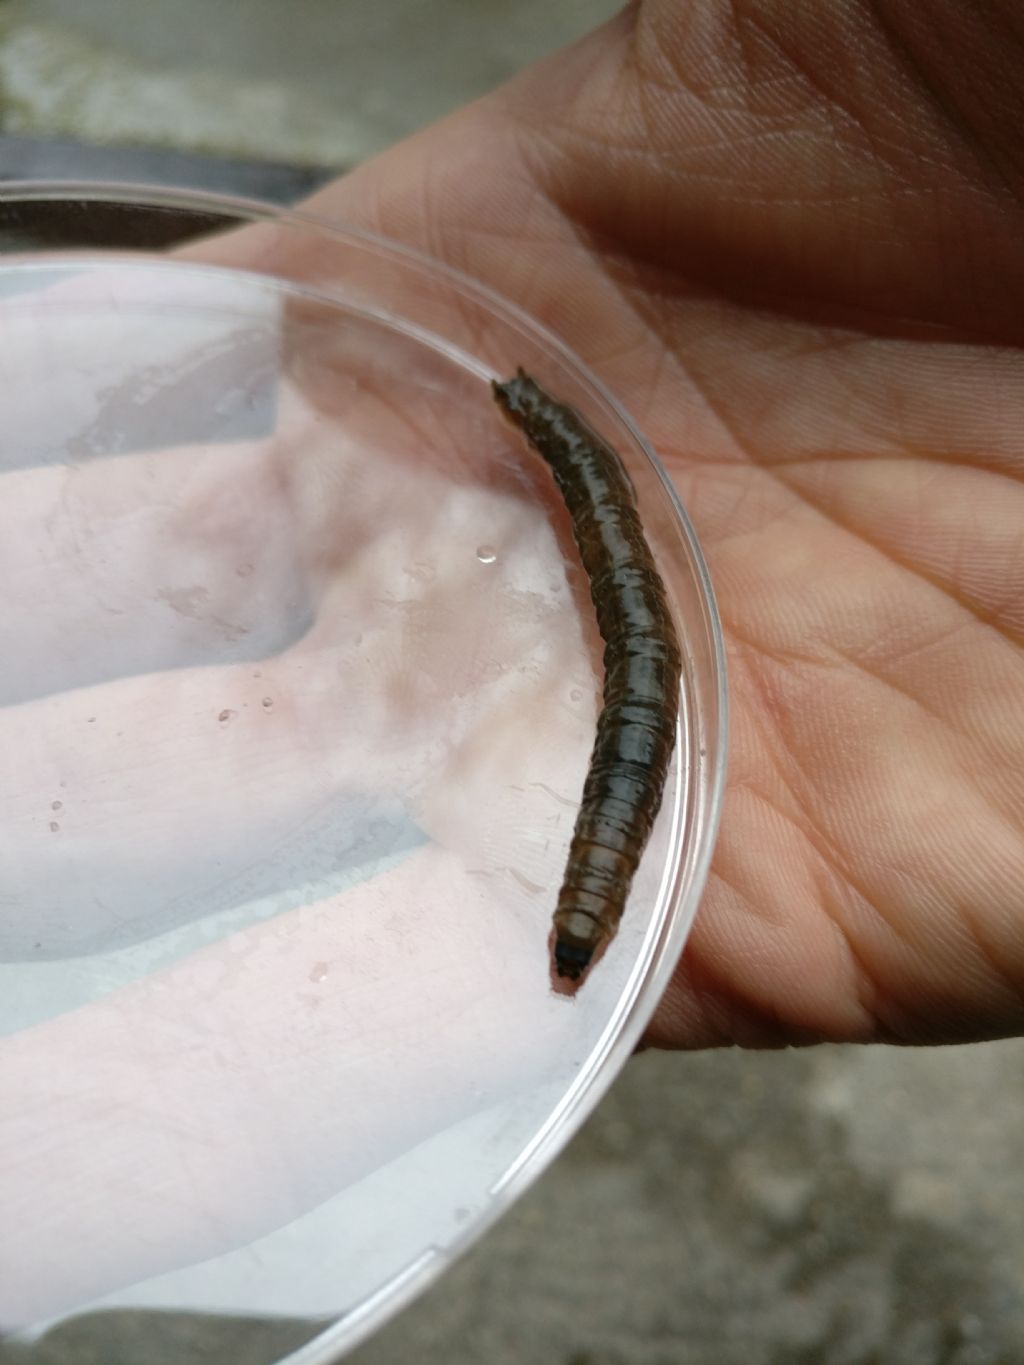 Identificazione larva dittero